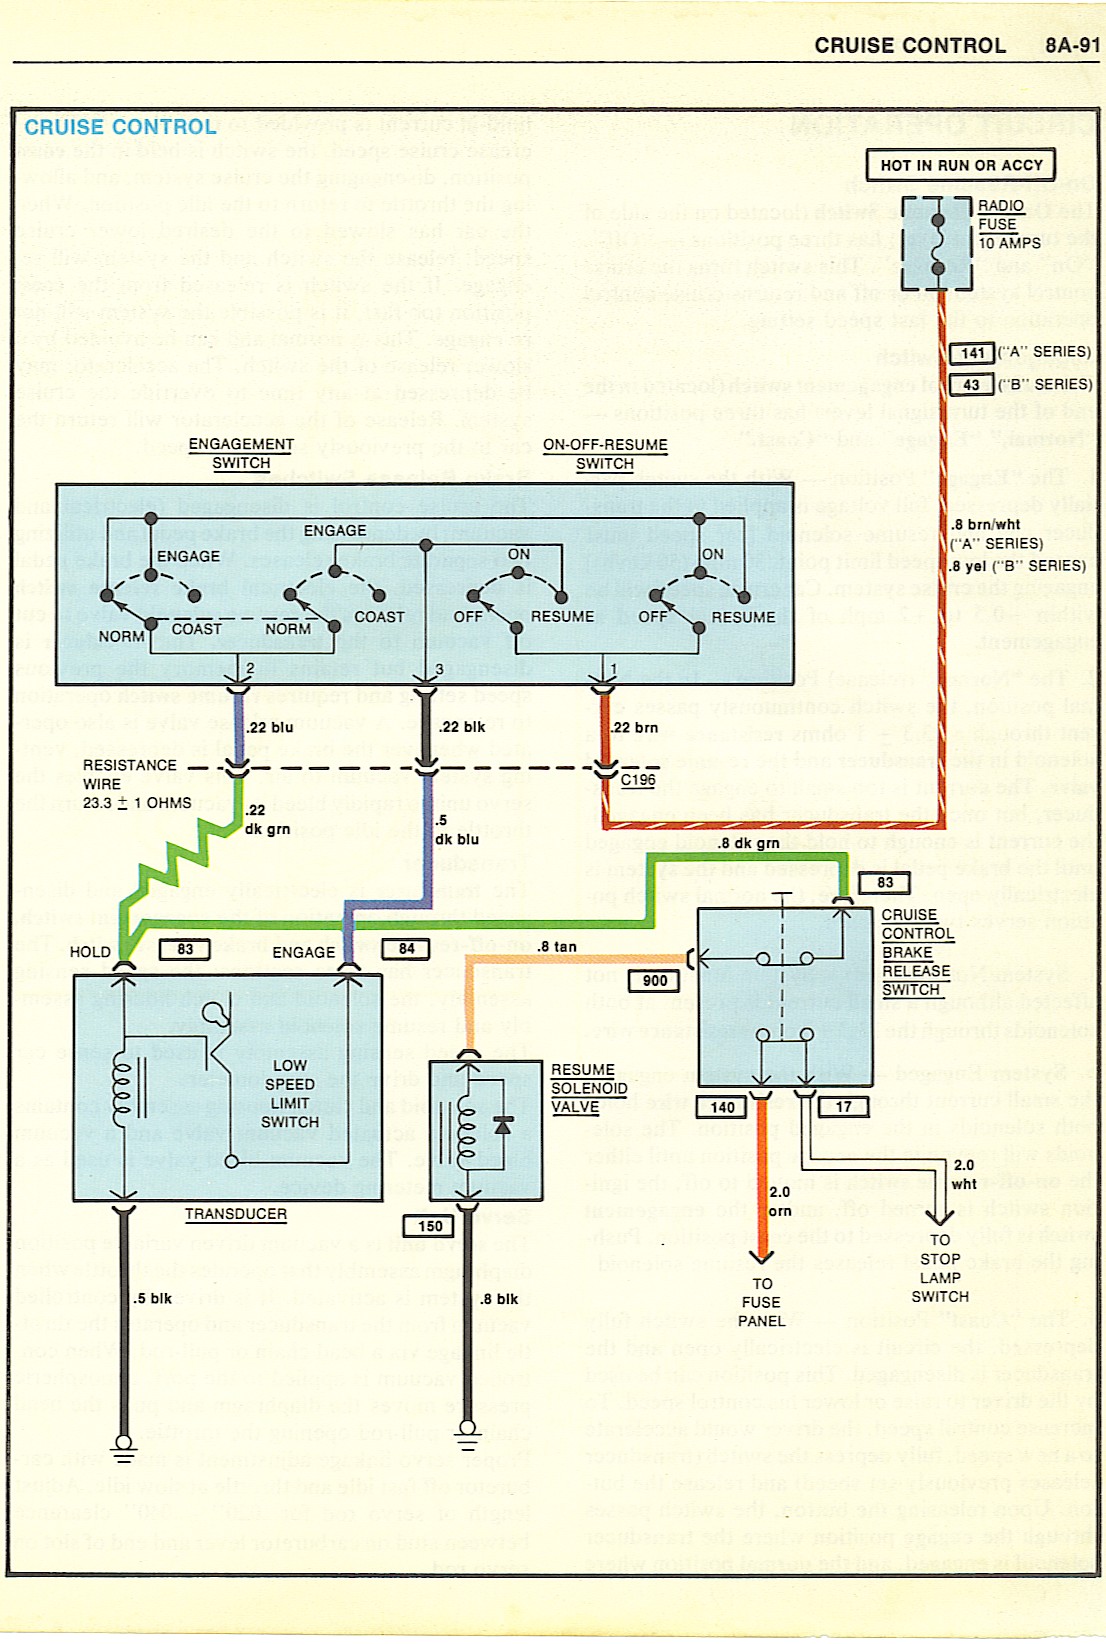 Diagram Aftermarket Cruise Control Wiring Diagram Full Version Hd Quality Wiring Diagram Seemdiagram Eracleaturismo It